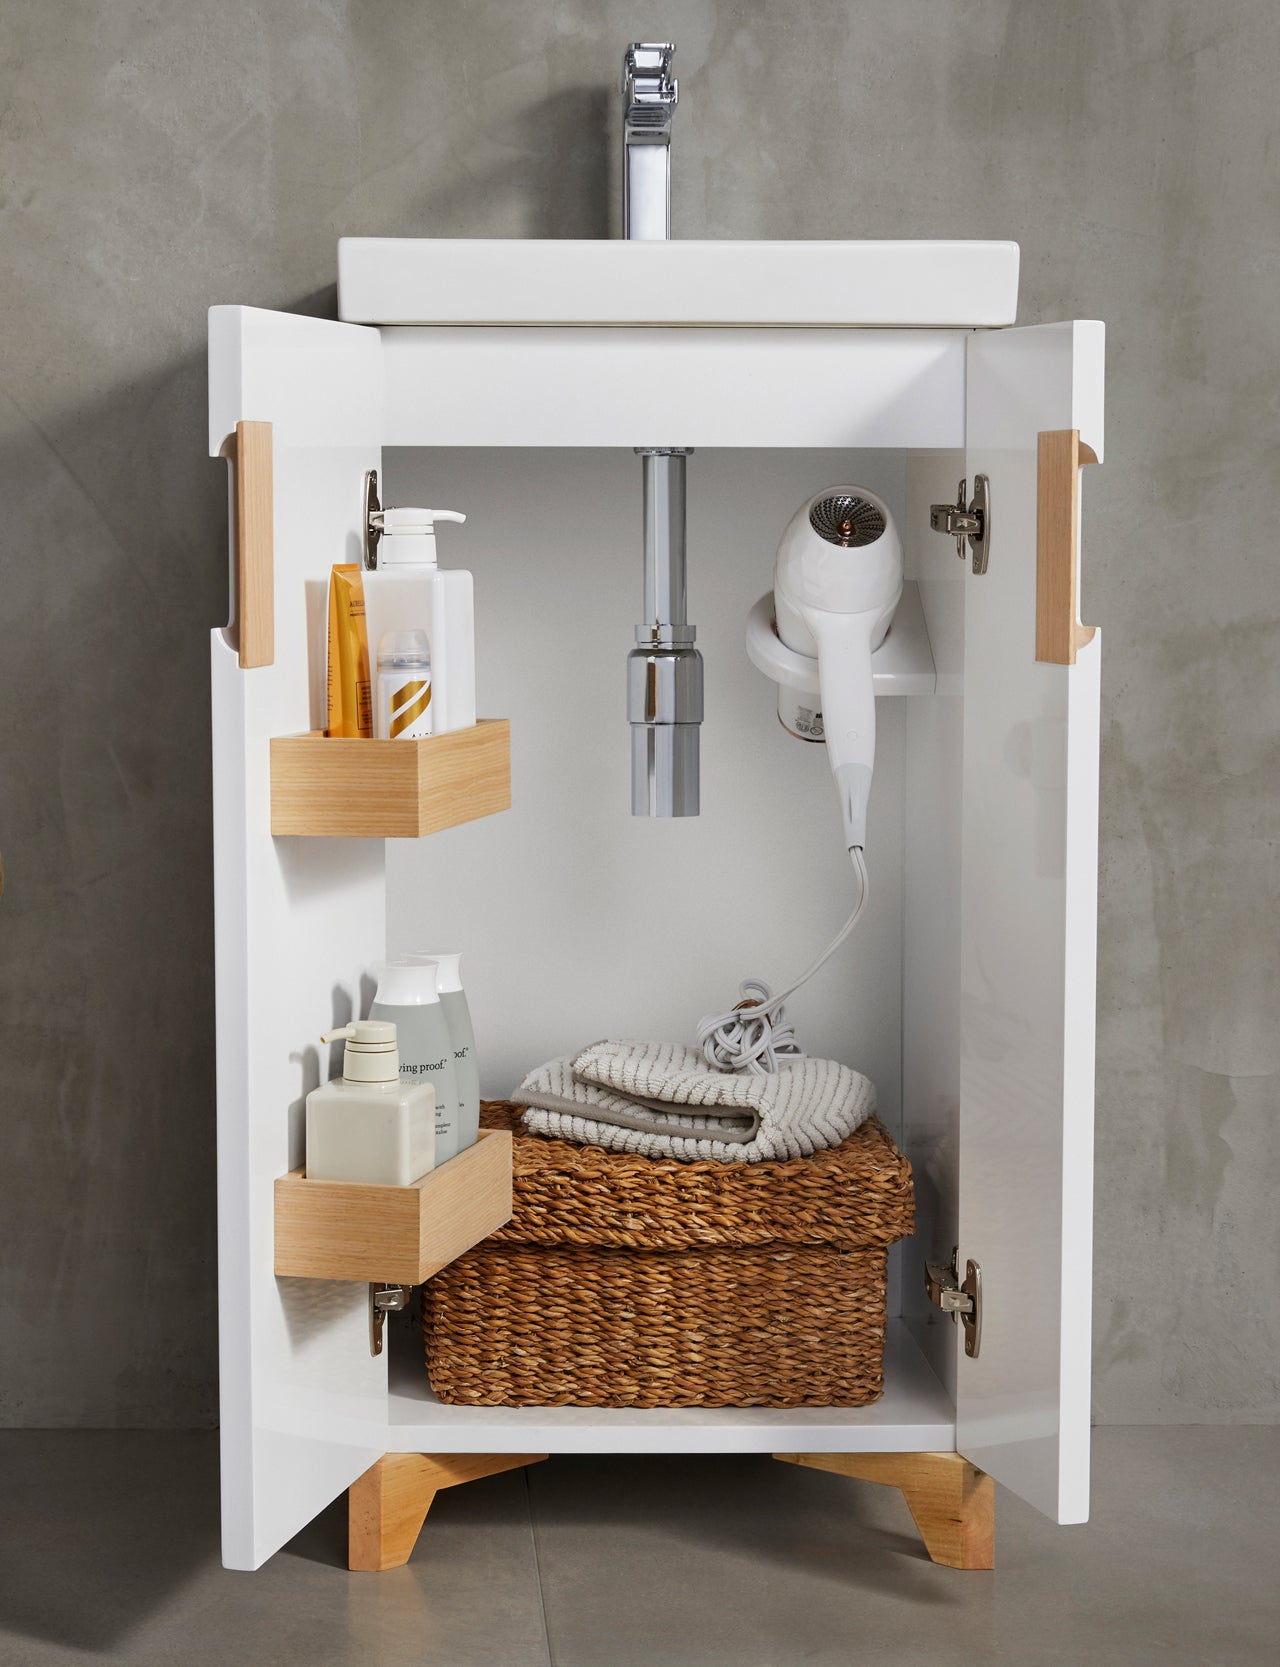 Tiny Triumph 30 Of The Best Small Bathroom Design Ideas